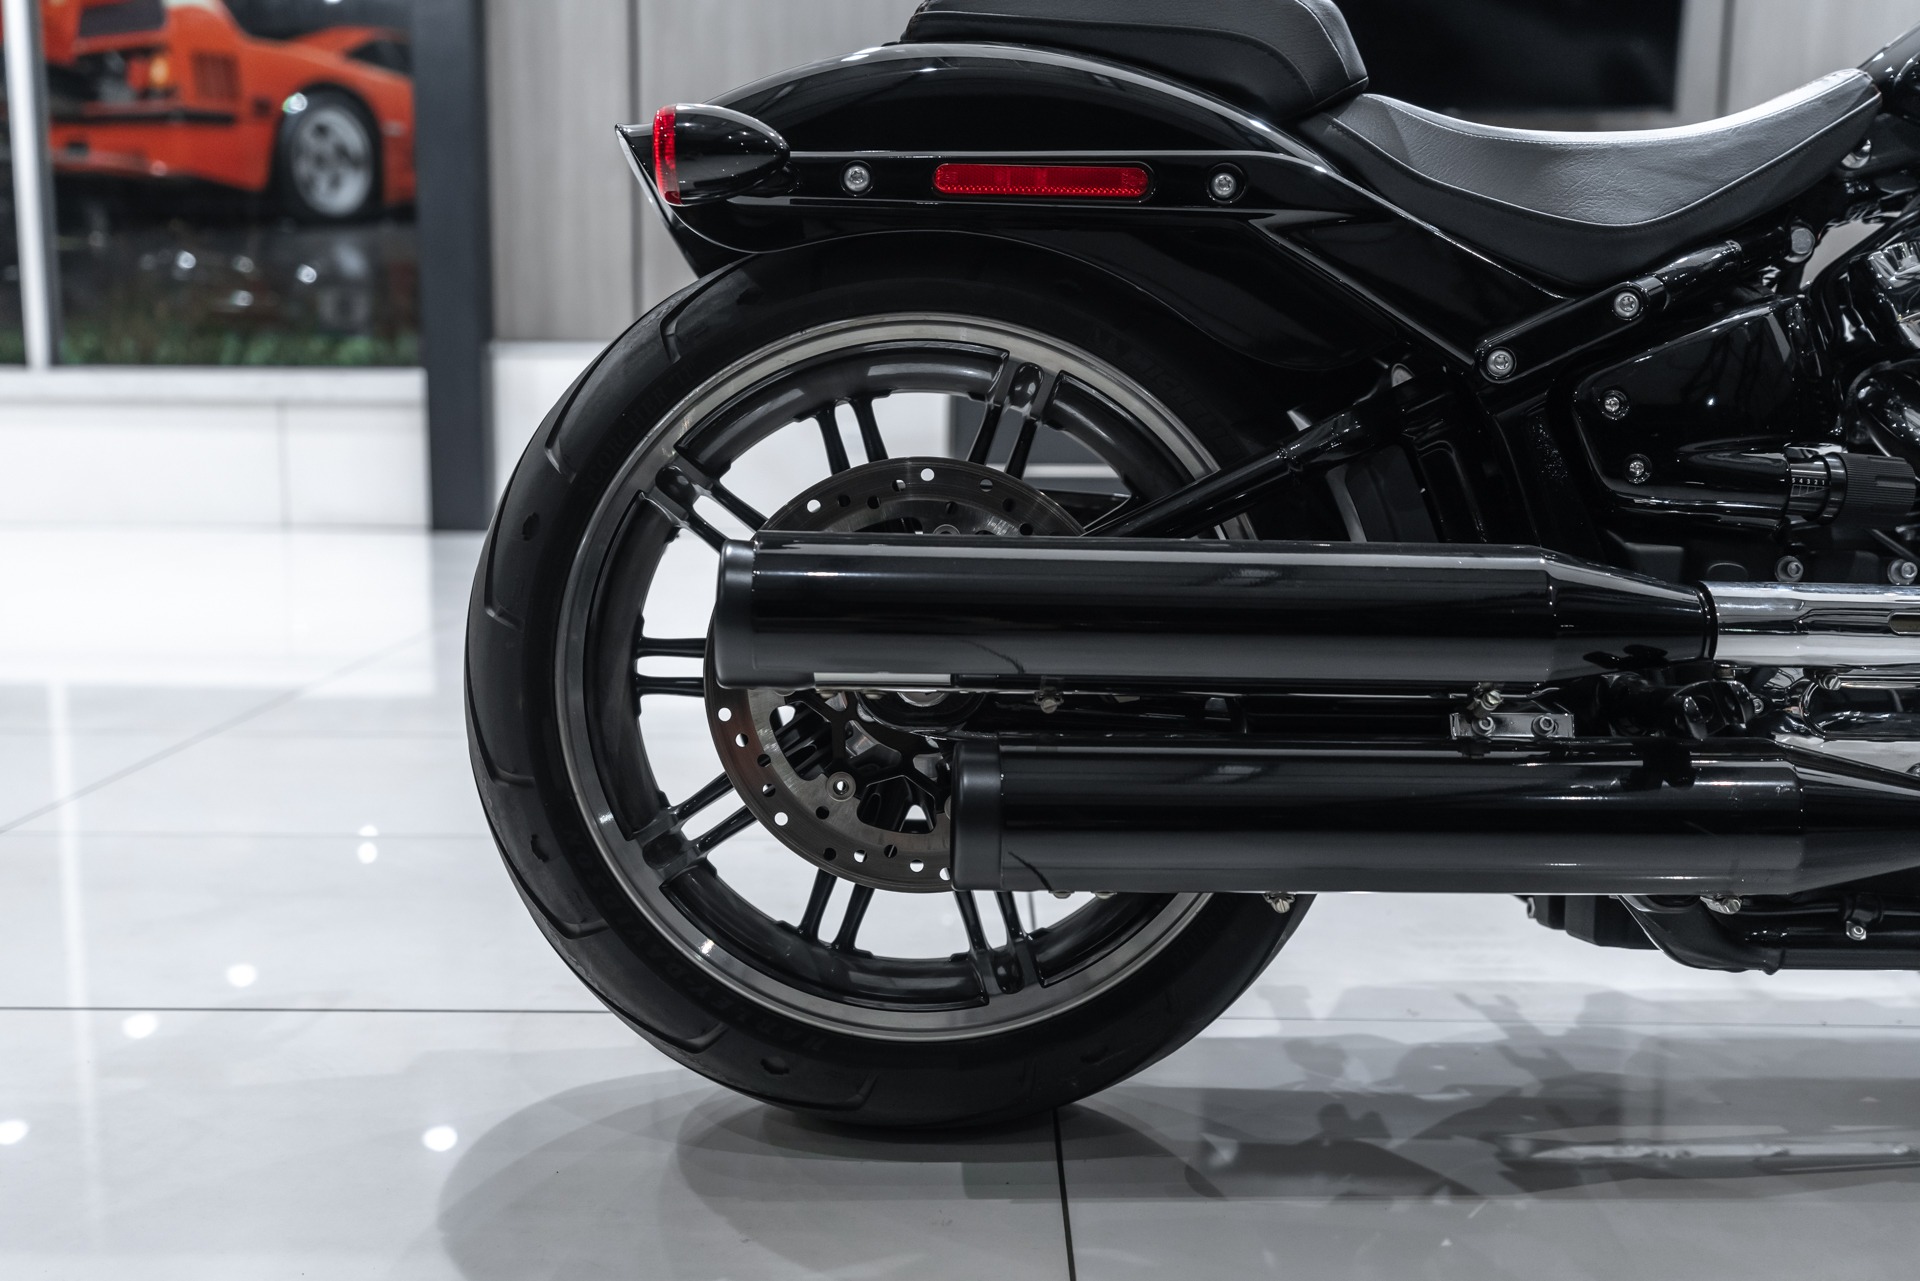 Used-2018-Harley-Davidson-FXBRS---Softail-Breaktout-114-Screaming-Eagle-Intake-Tab-Performance-Exhaust